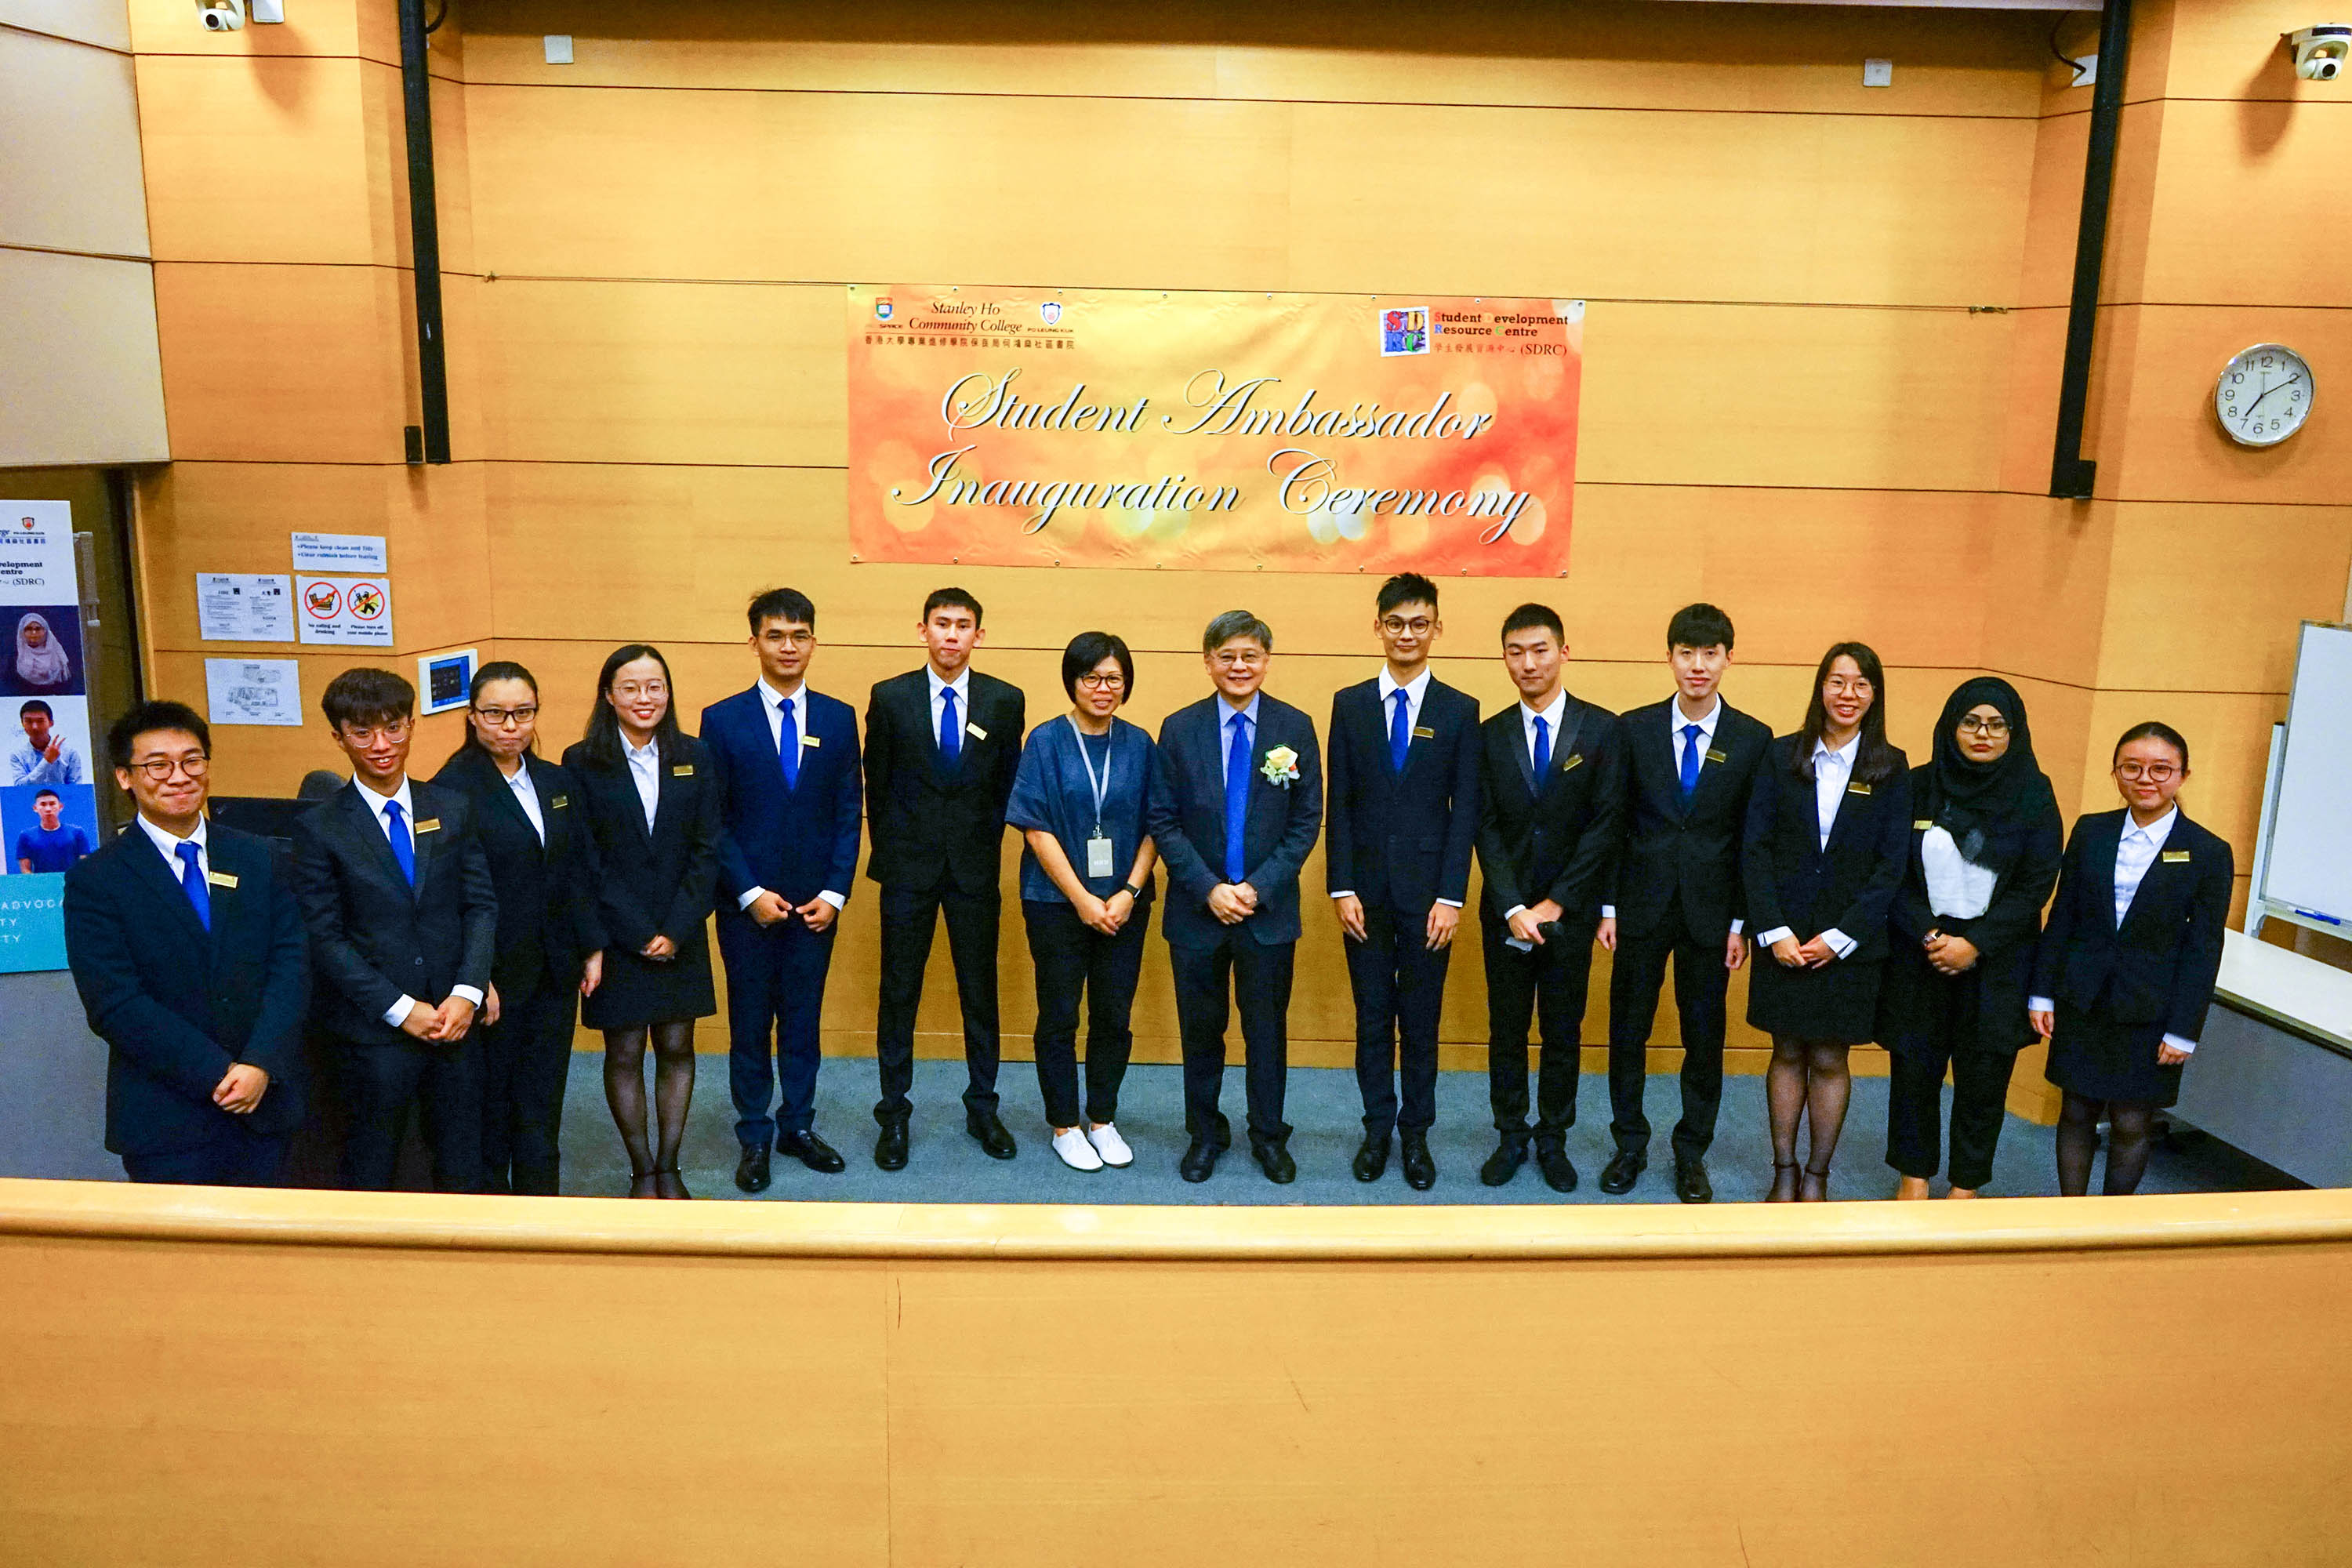 Student Ambassadors Inauguration Ceremony 2019-20 - Photo - 3